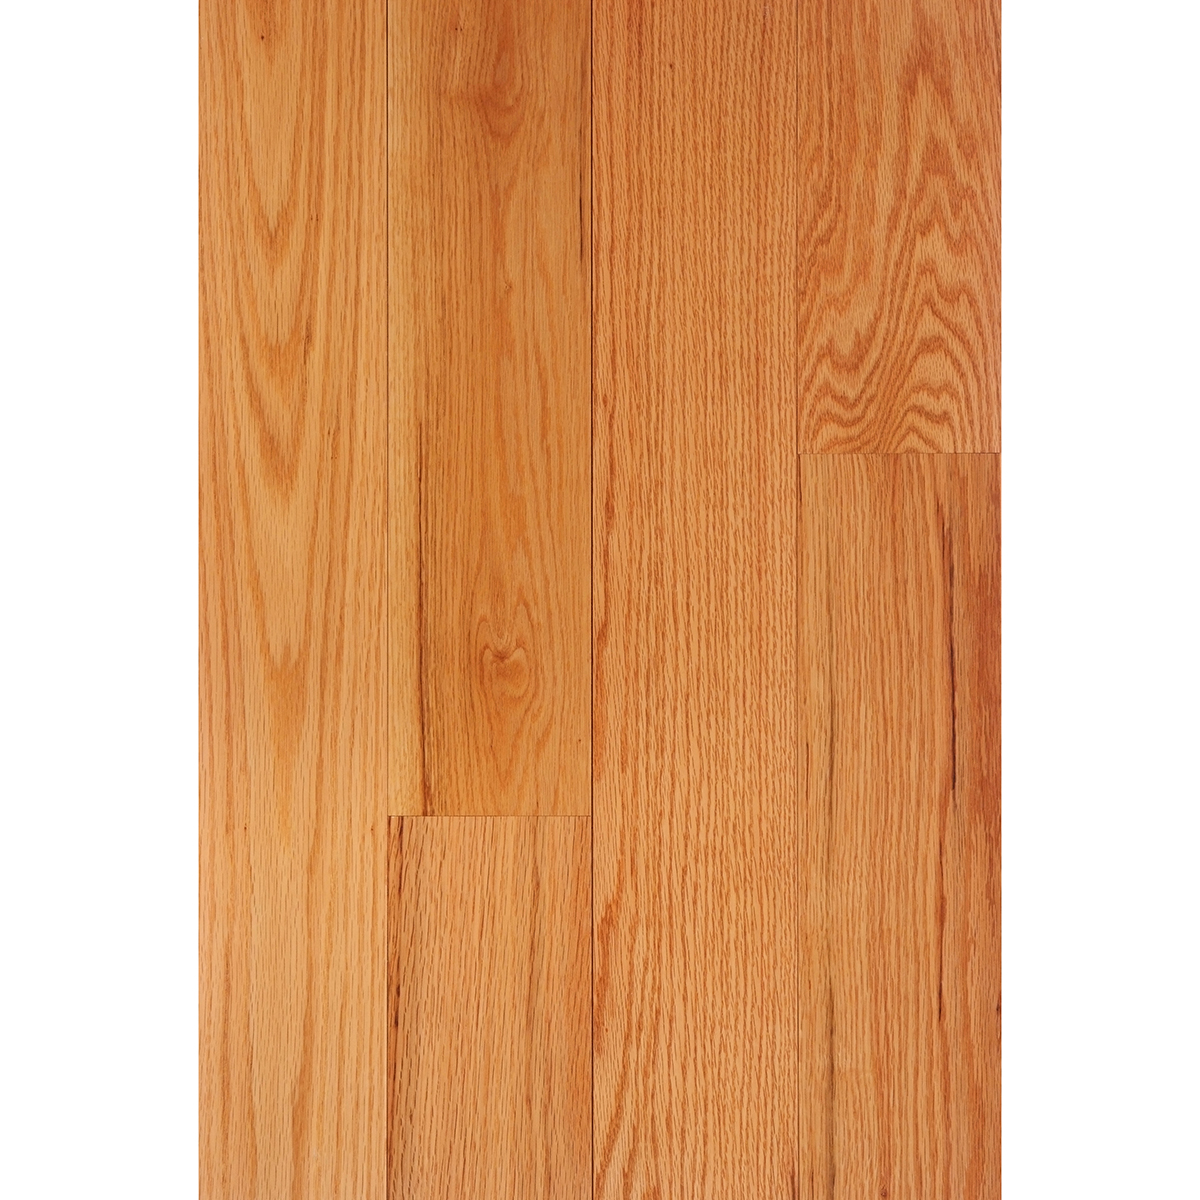 Red Oak Select Grade Flooring, 3 4 Prefinished Hardwood Flooring